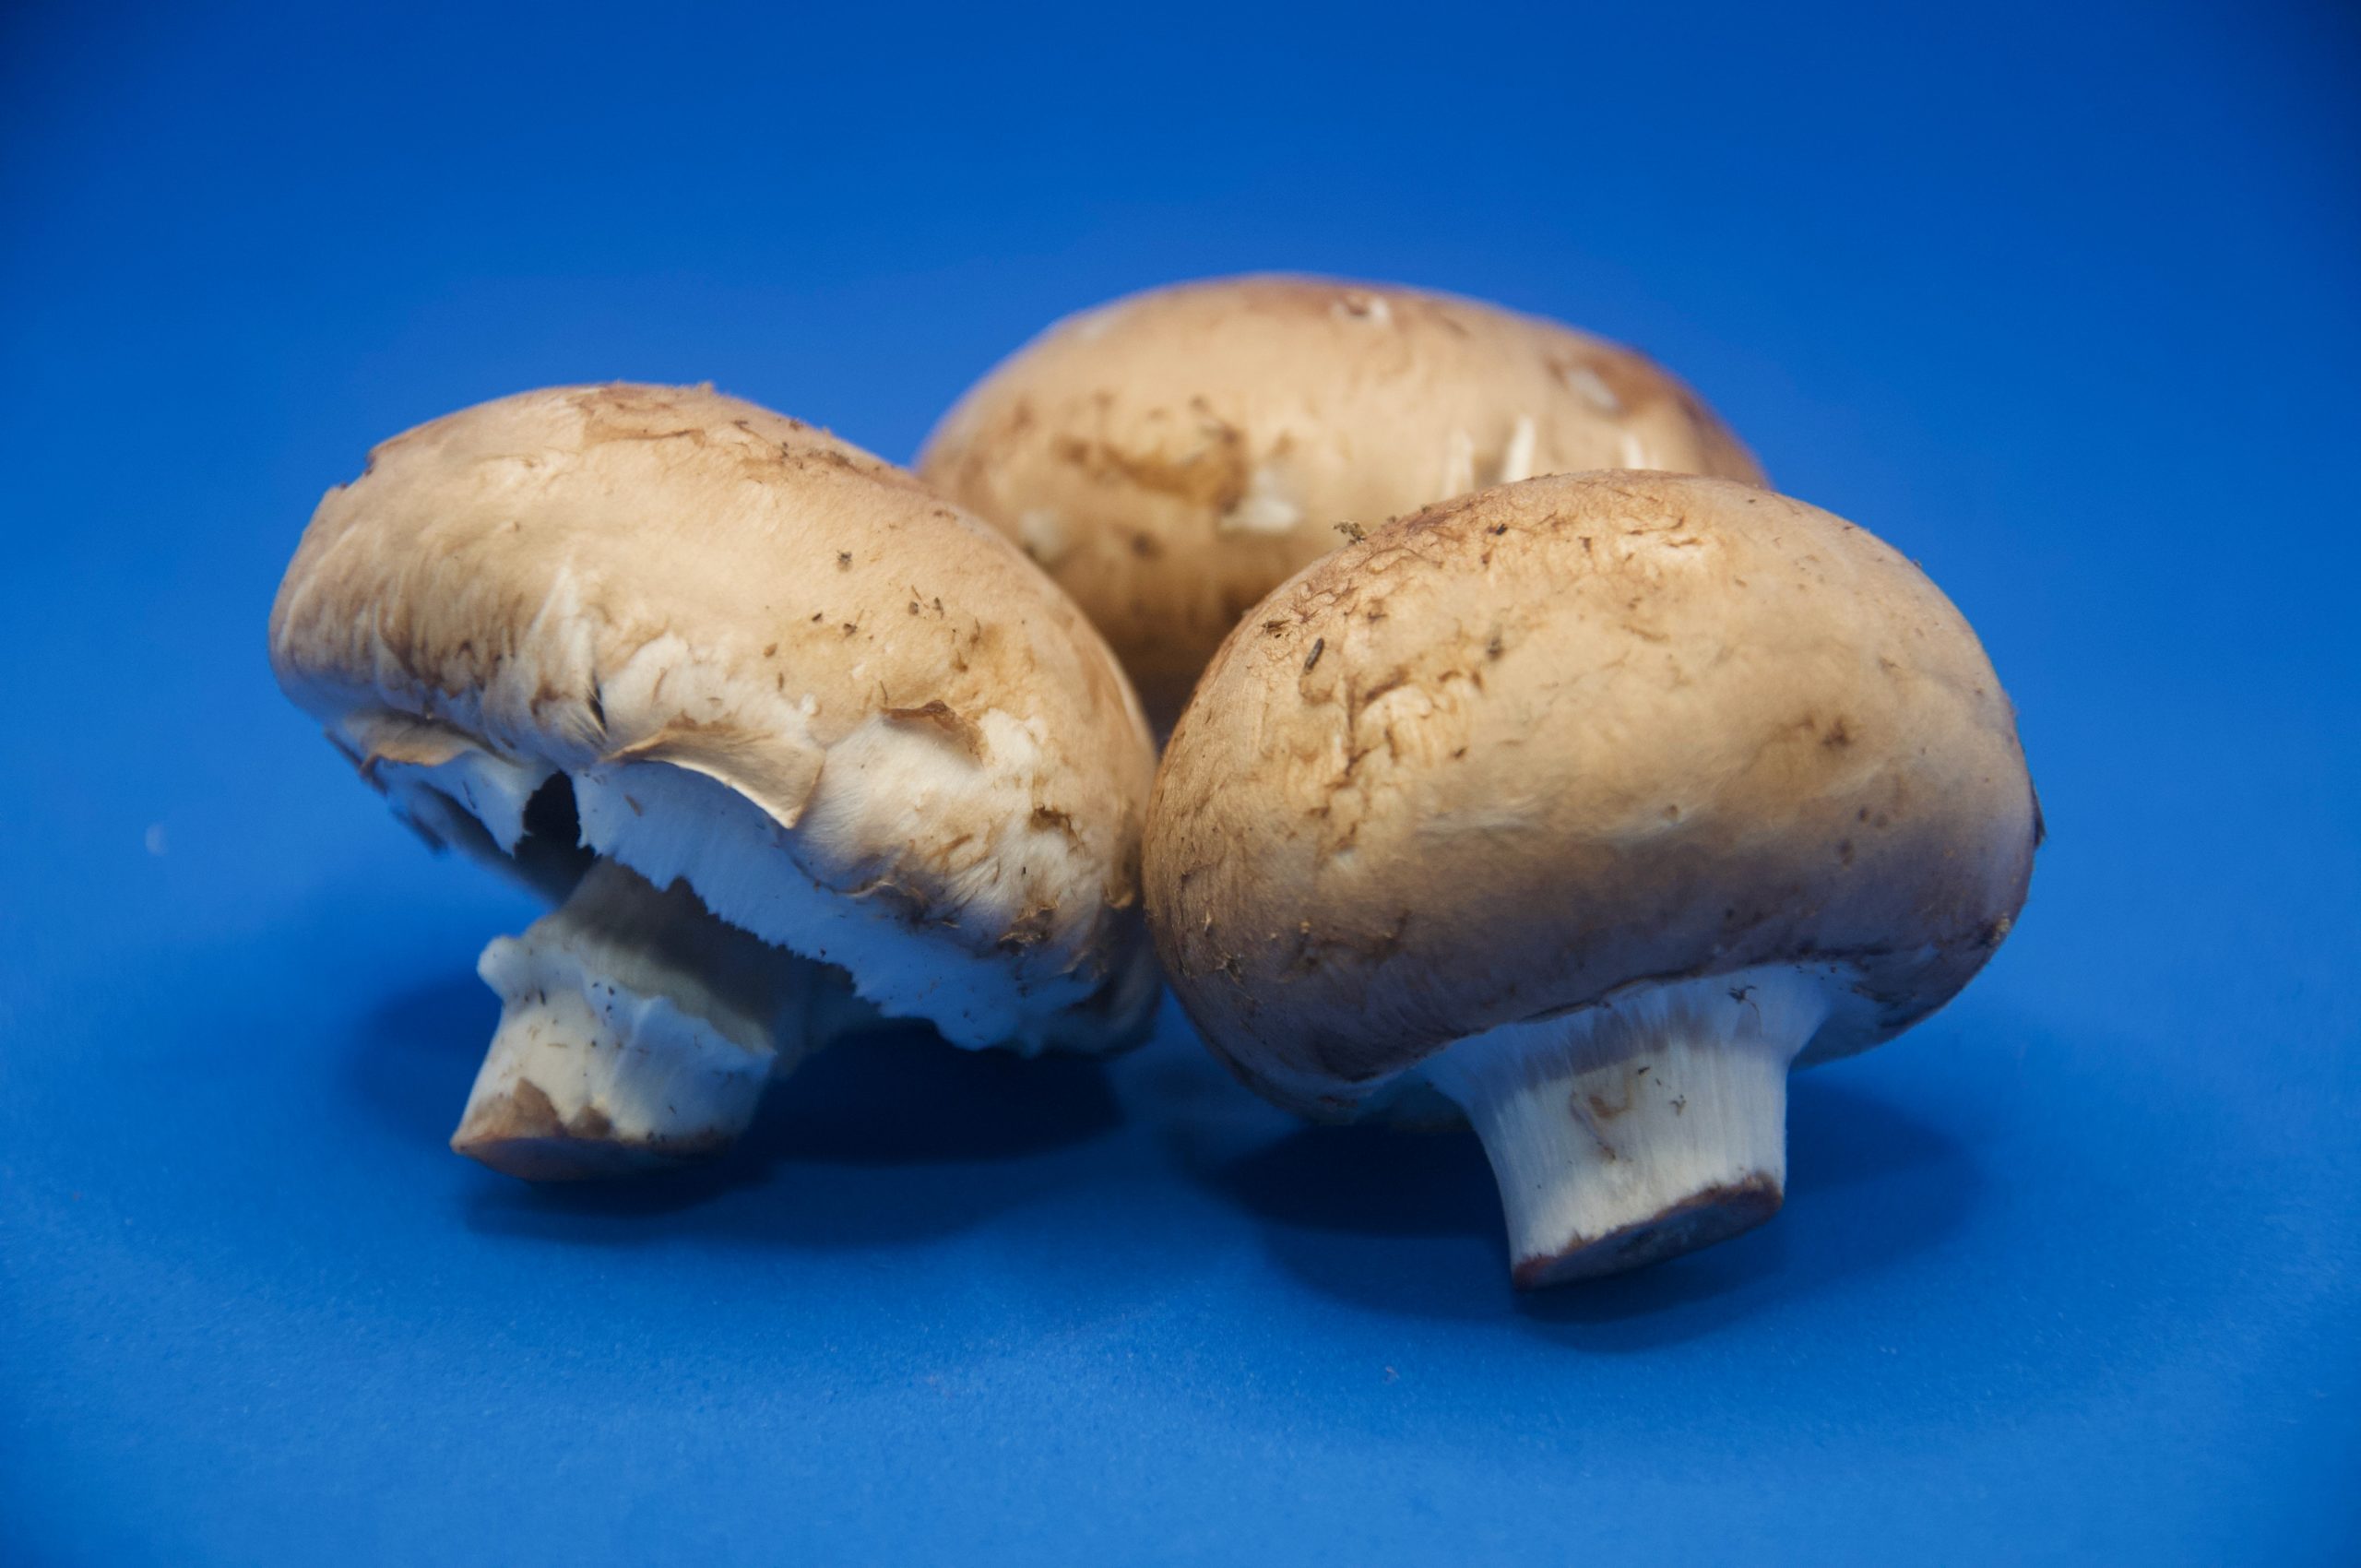 Growing Portobello Mushrooms From Spores